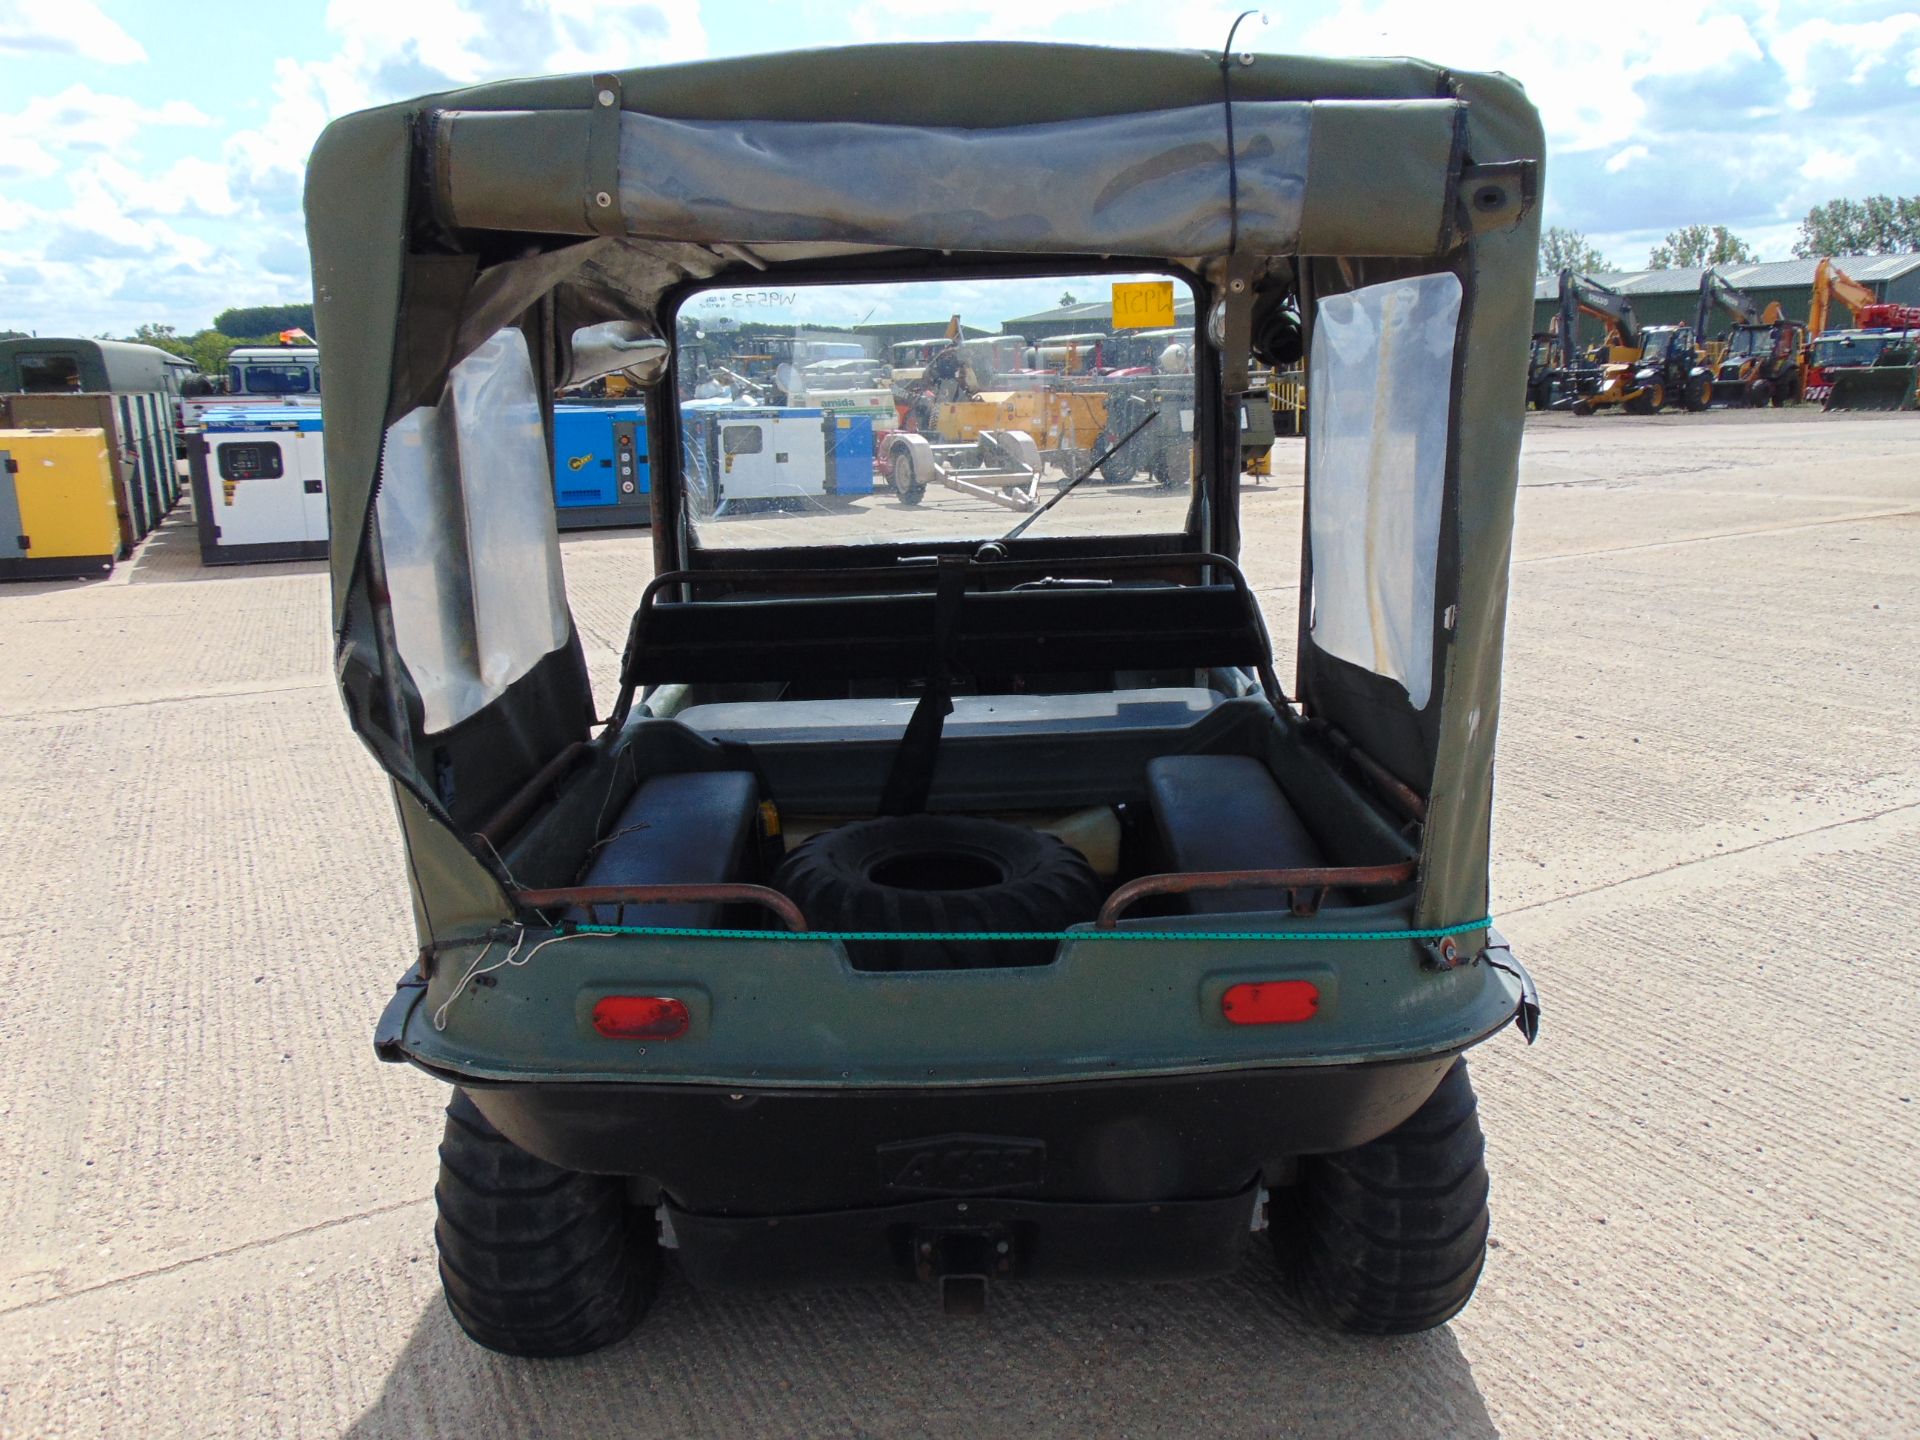 Argocat 8x8 Conquest Amphibious ATV with Canopy - Image 7 of 19